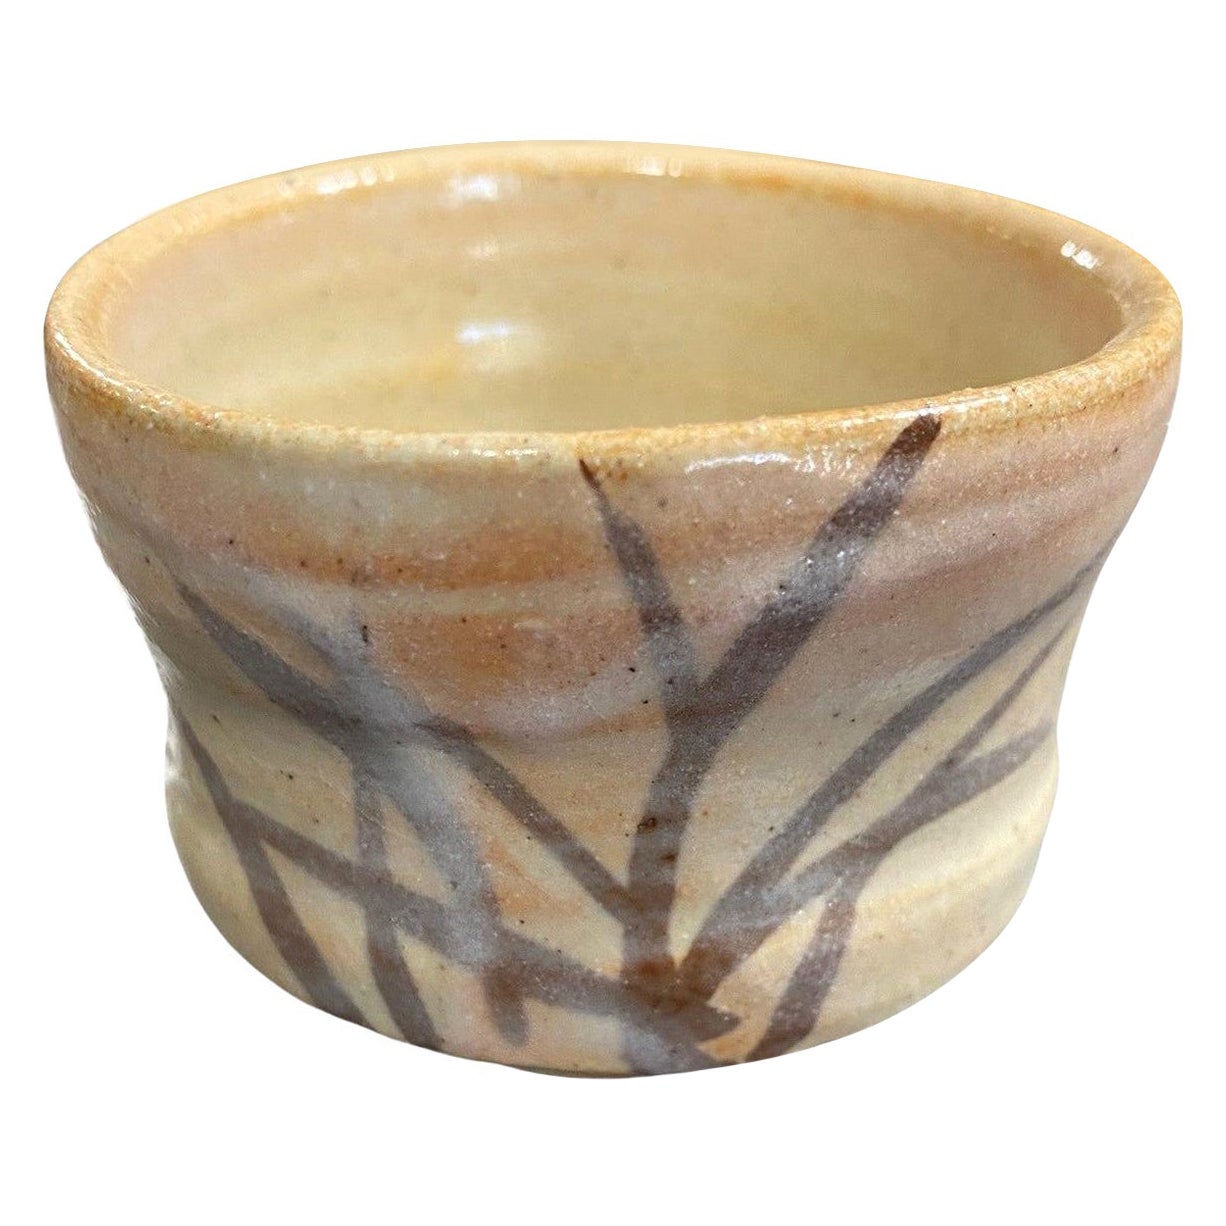 Tasse à thé Sake en porcelaine de Shino signée Rosanjin Kitaoji avec boîte scellée d'origine